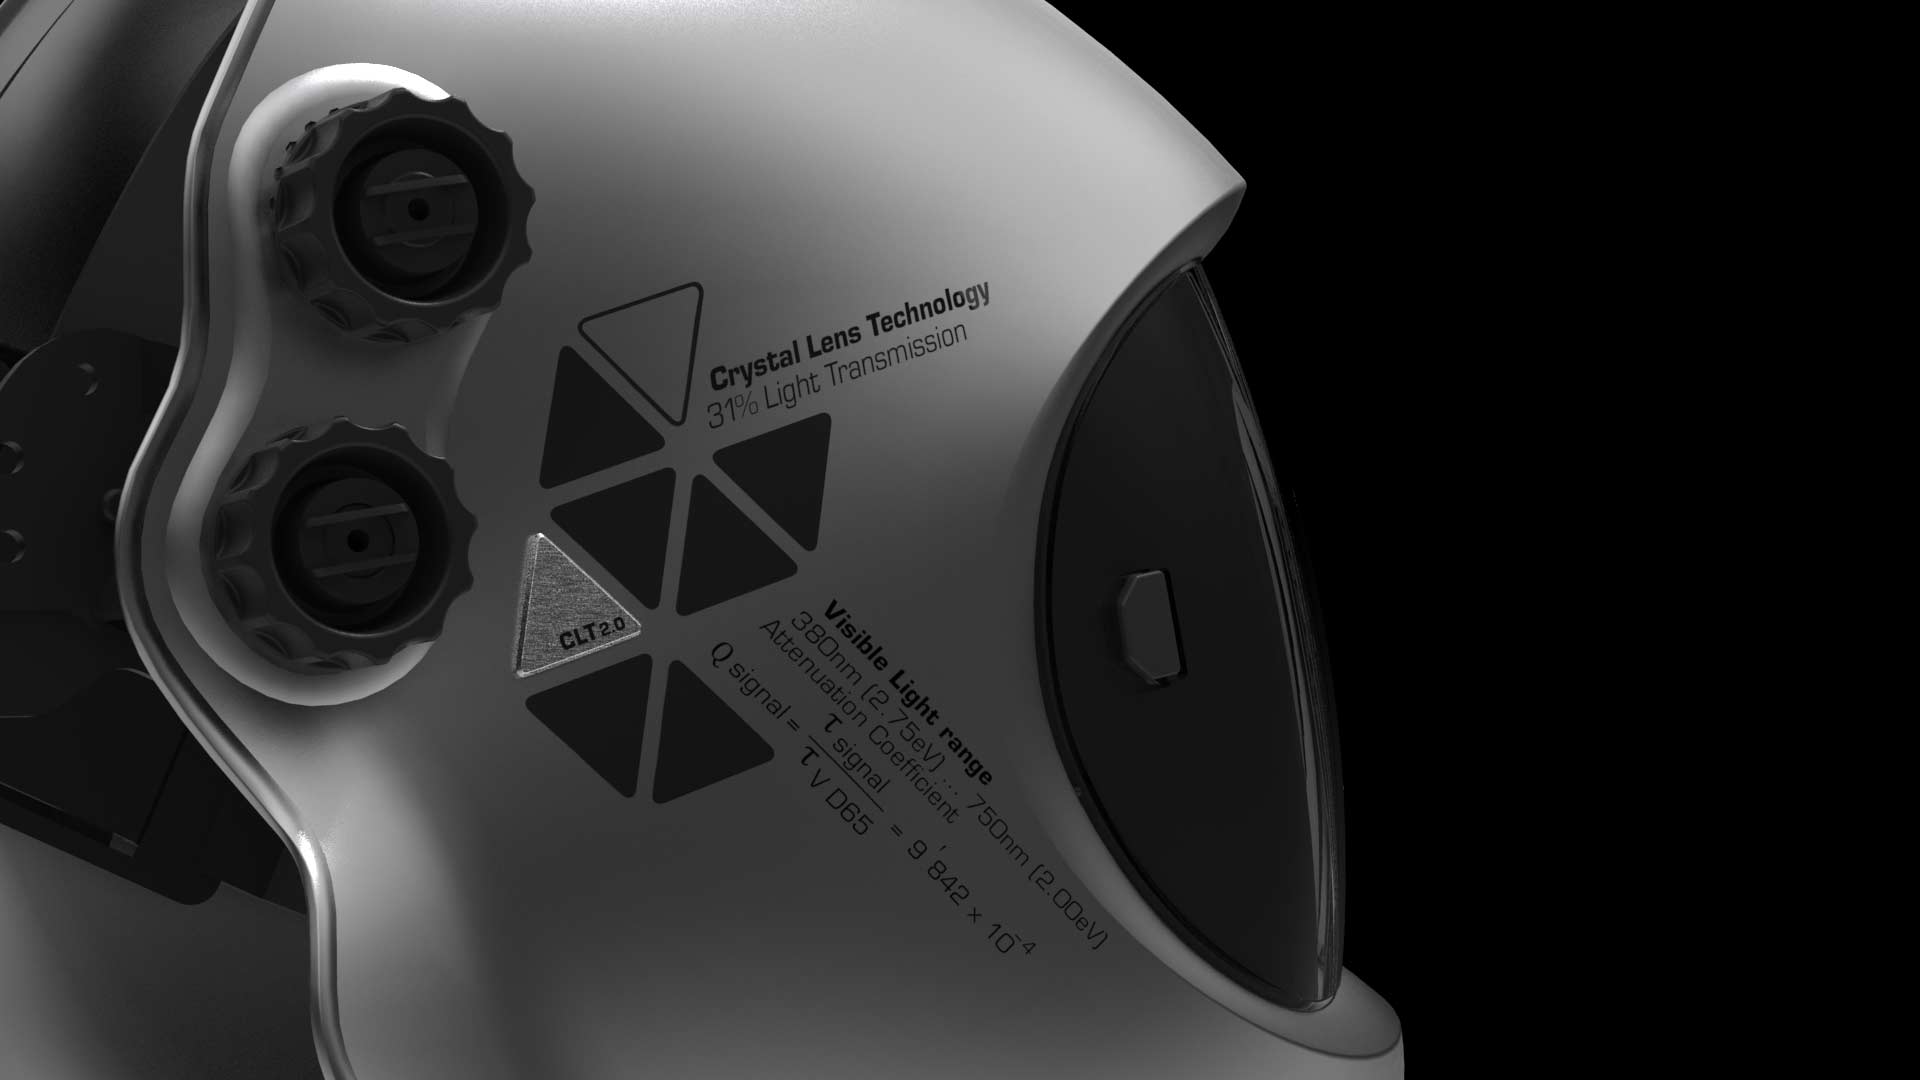 Optrel Crystal 2.0 Welding Helmet for E3000 PAPR (4442.900)